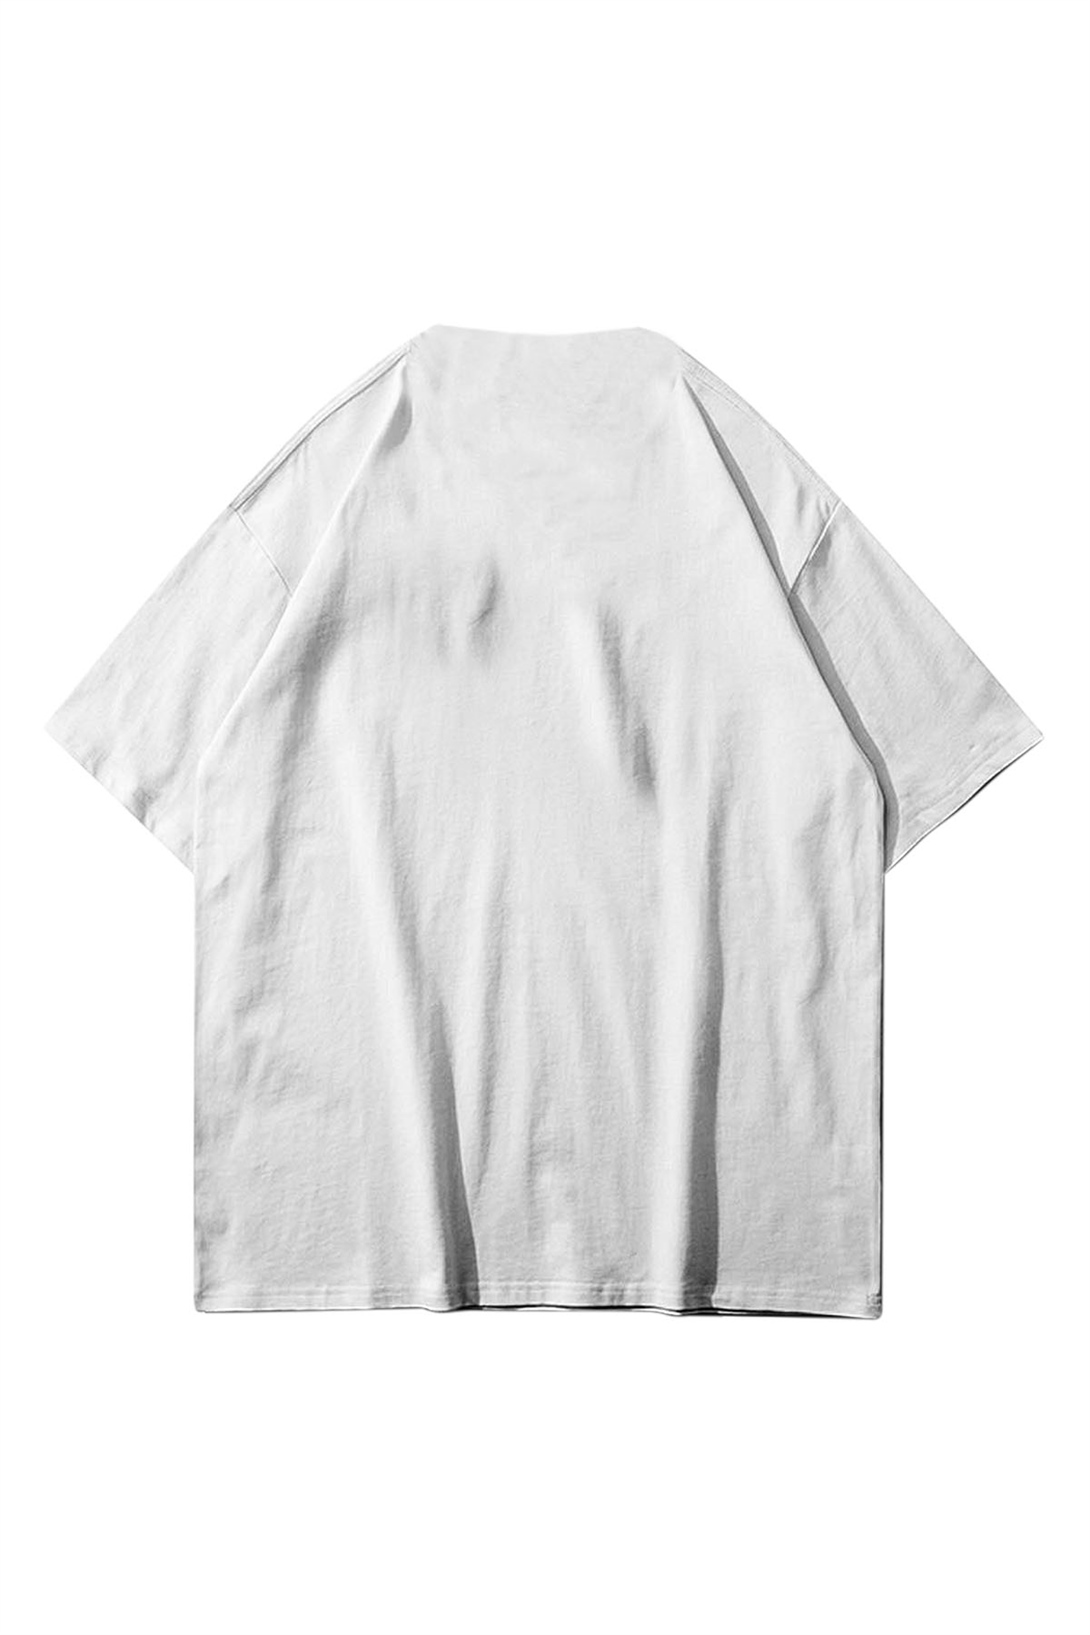 Trendiz Unisex İskelet Cactus Beyaz Tshirt